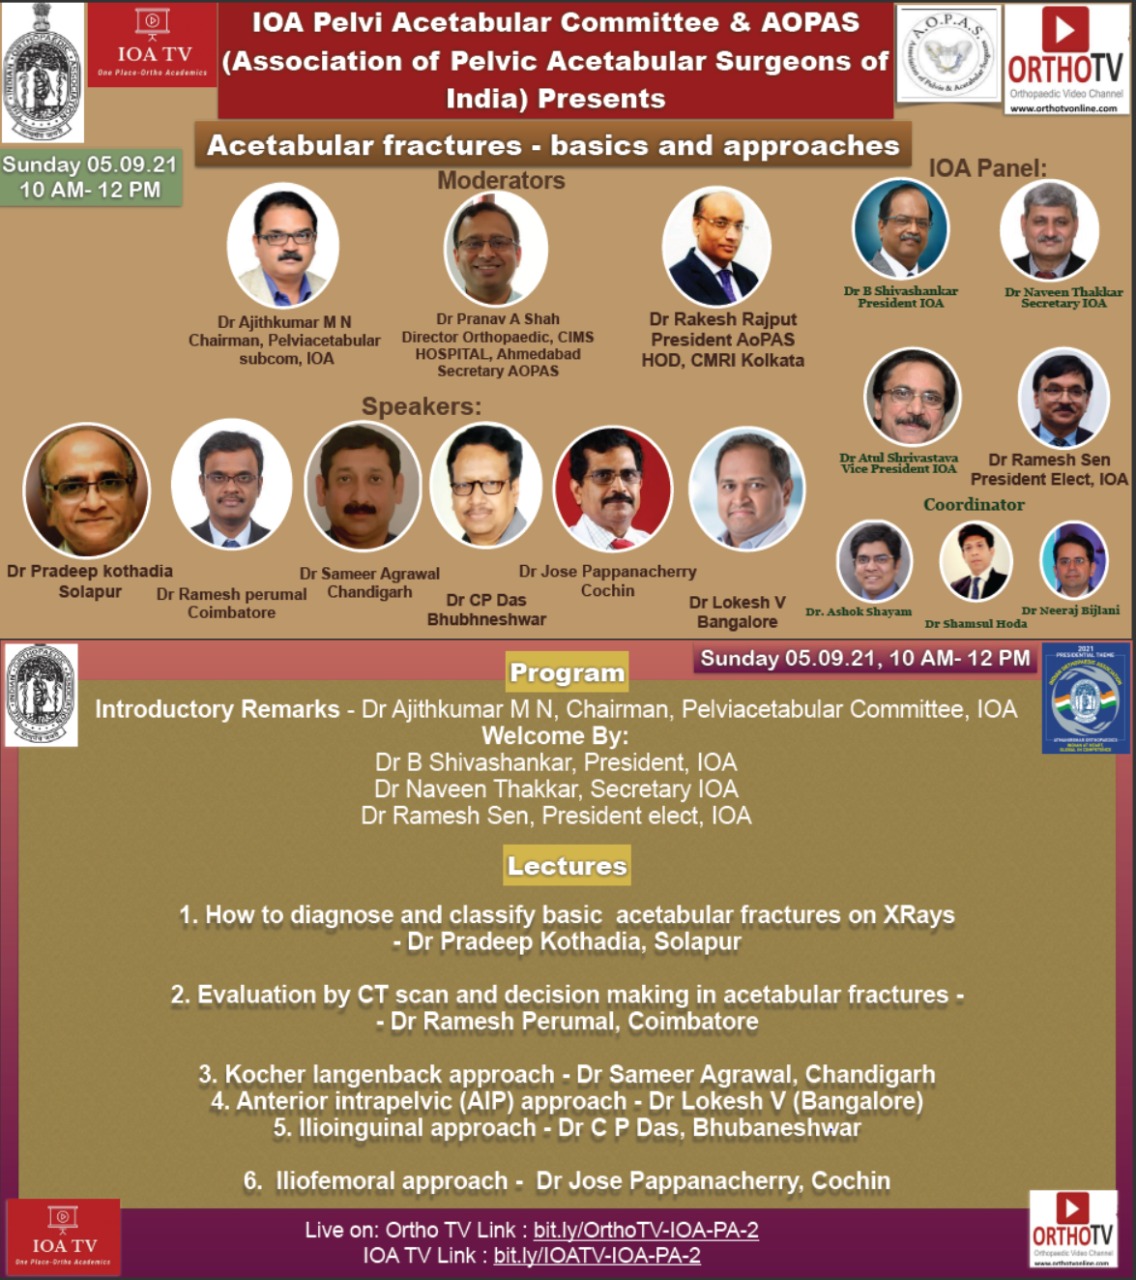 IOA Pelvi Acetabular Committee & AOPAS (Association of Pelvic Acetabular Surgeons of India) Presents Acetabular fractures - Basics and Approaches